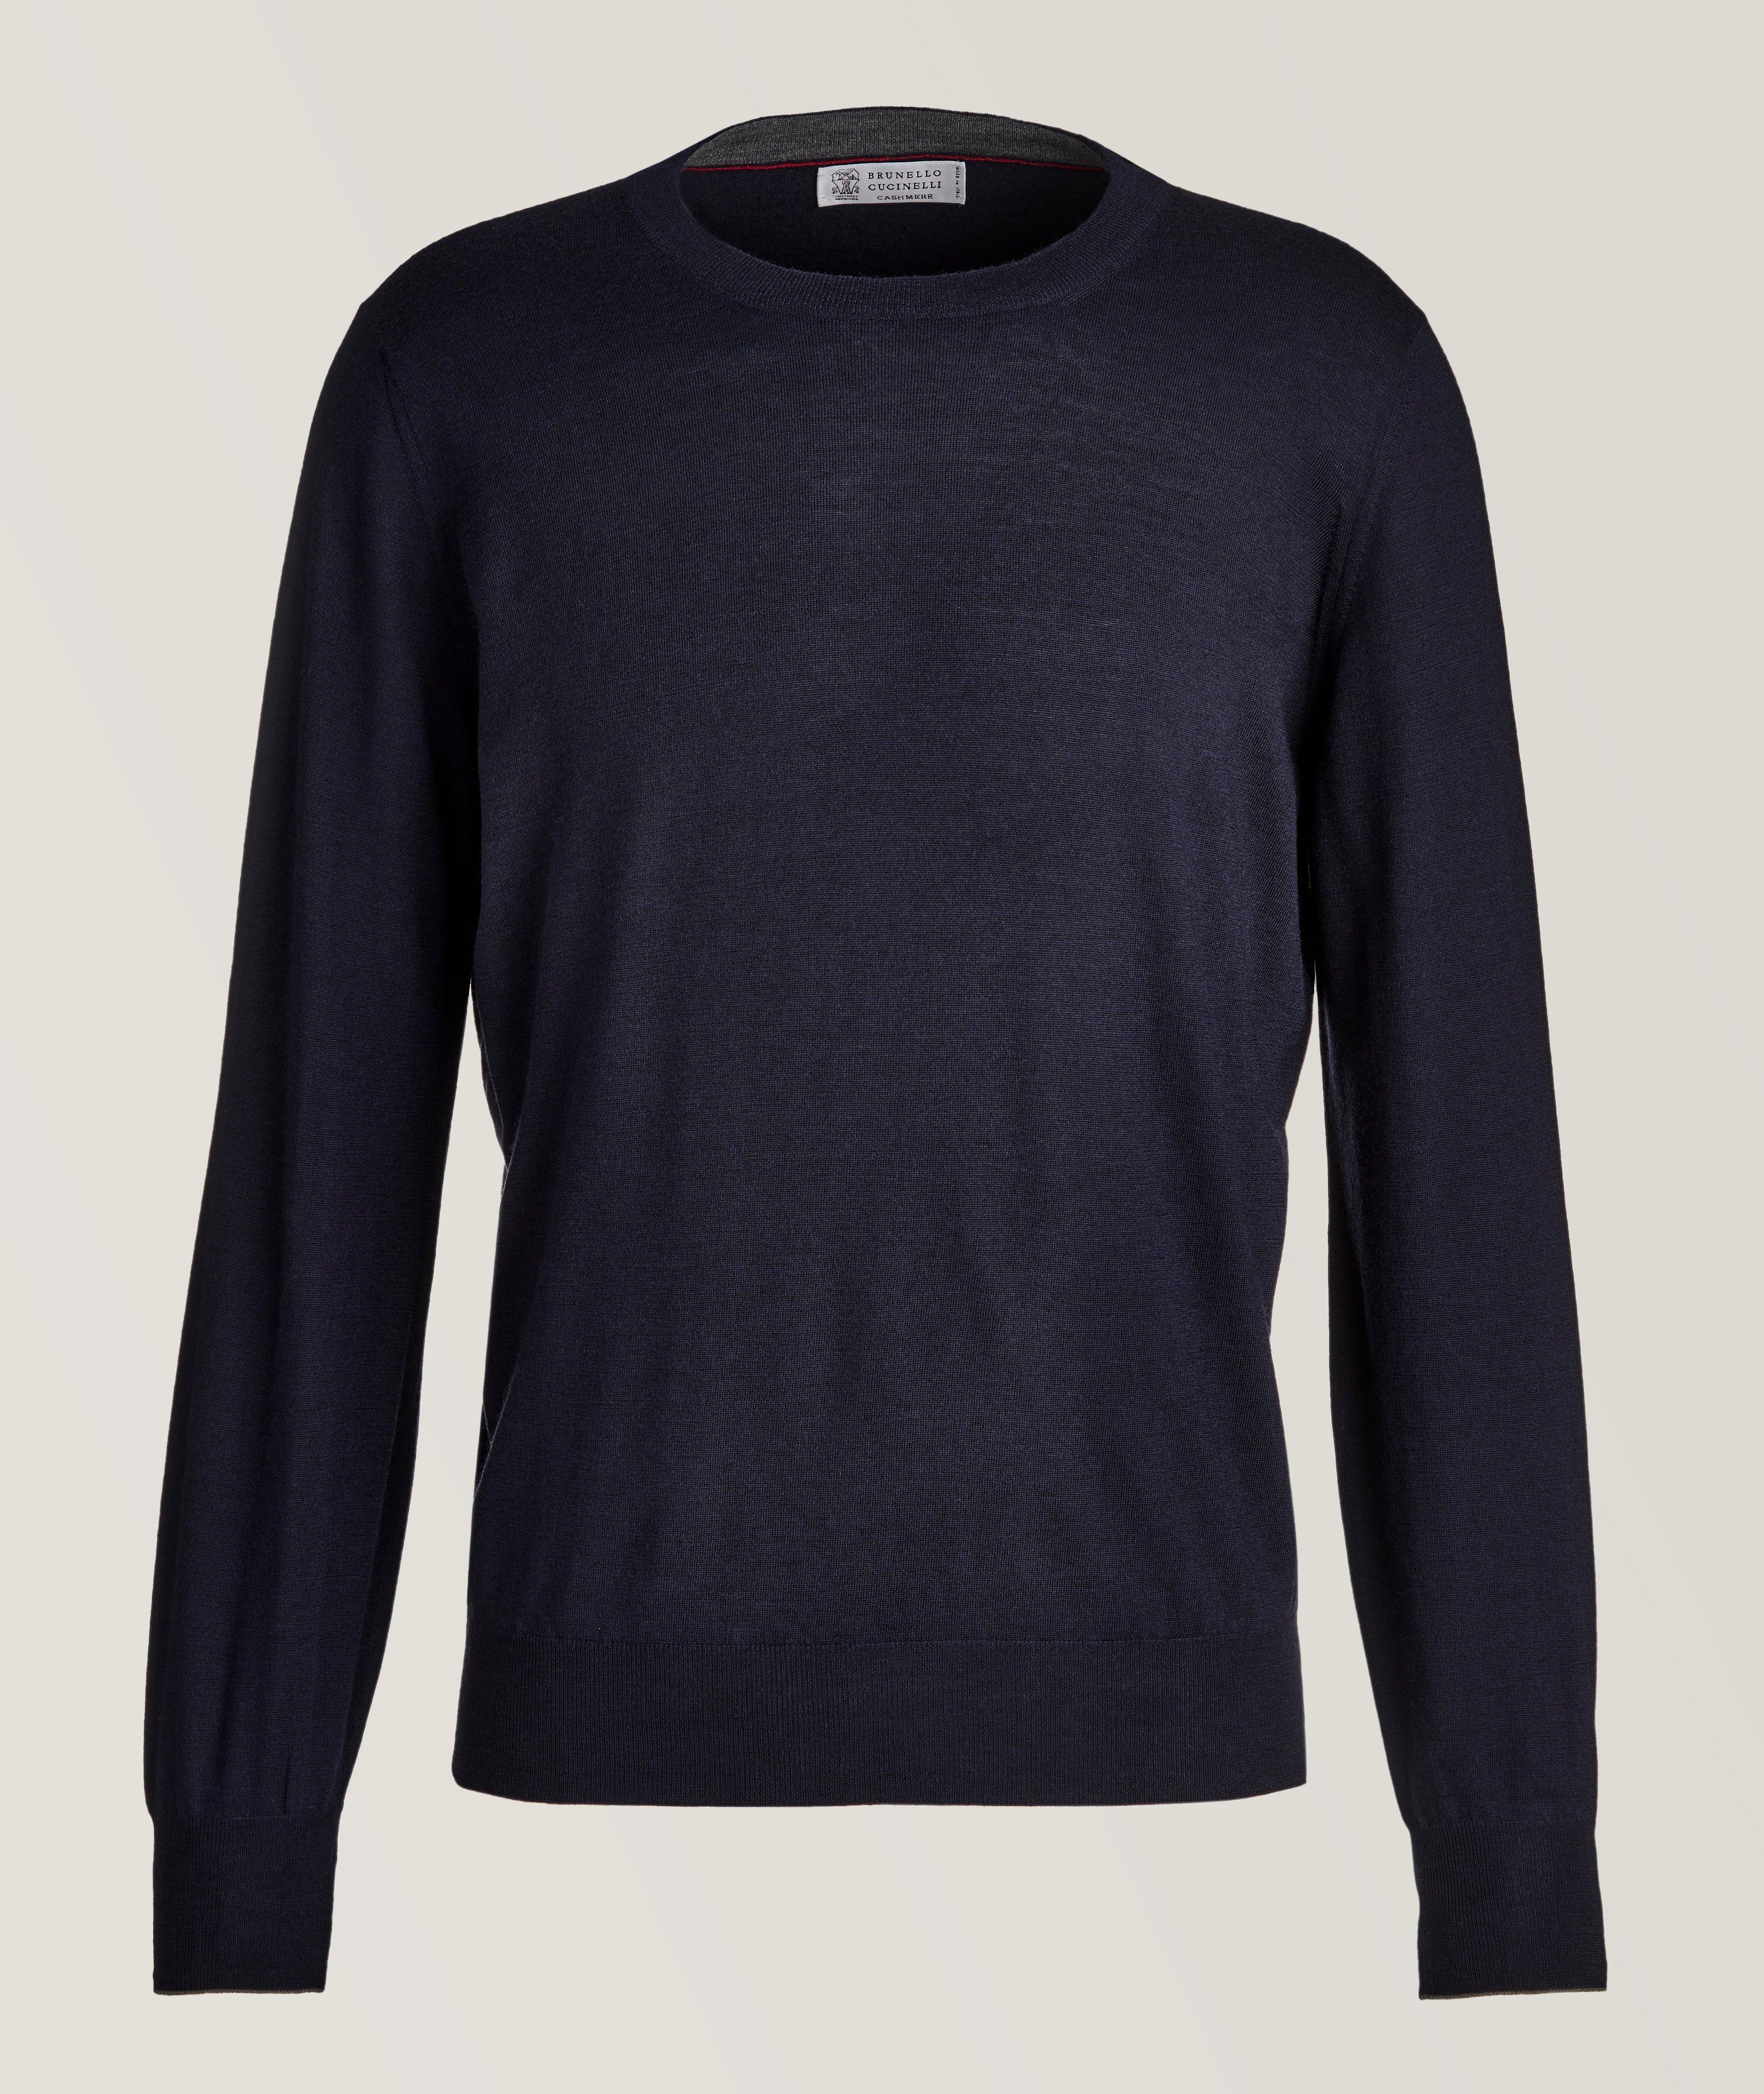 Wool-Cashmere Knit Crewneck Sweater image 0